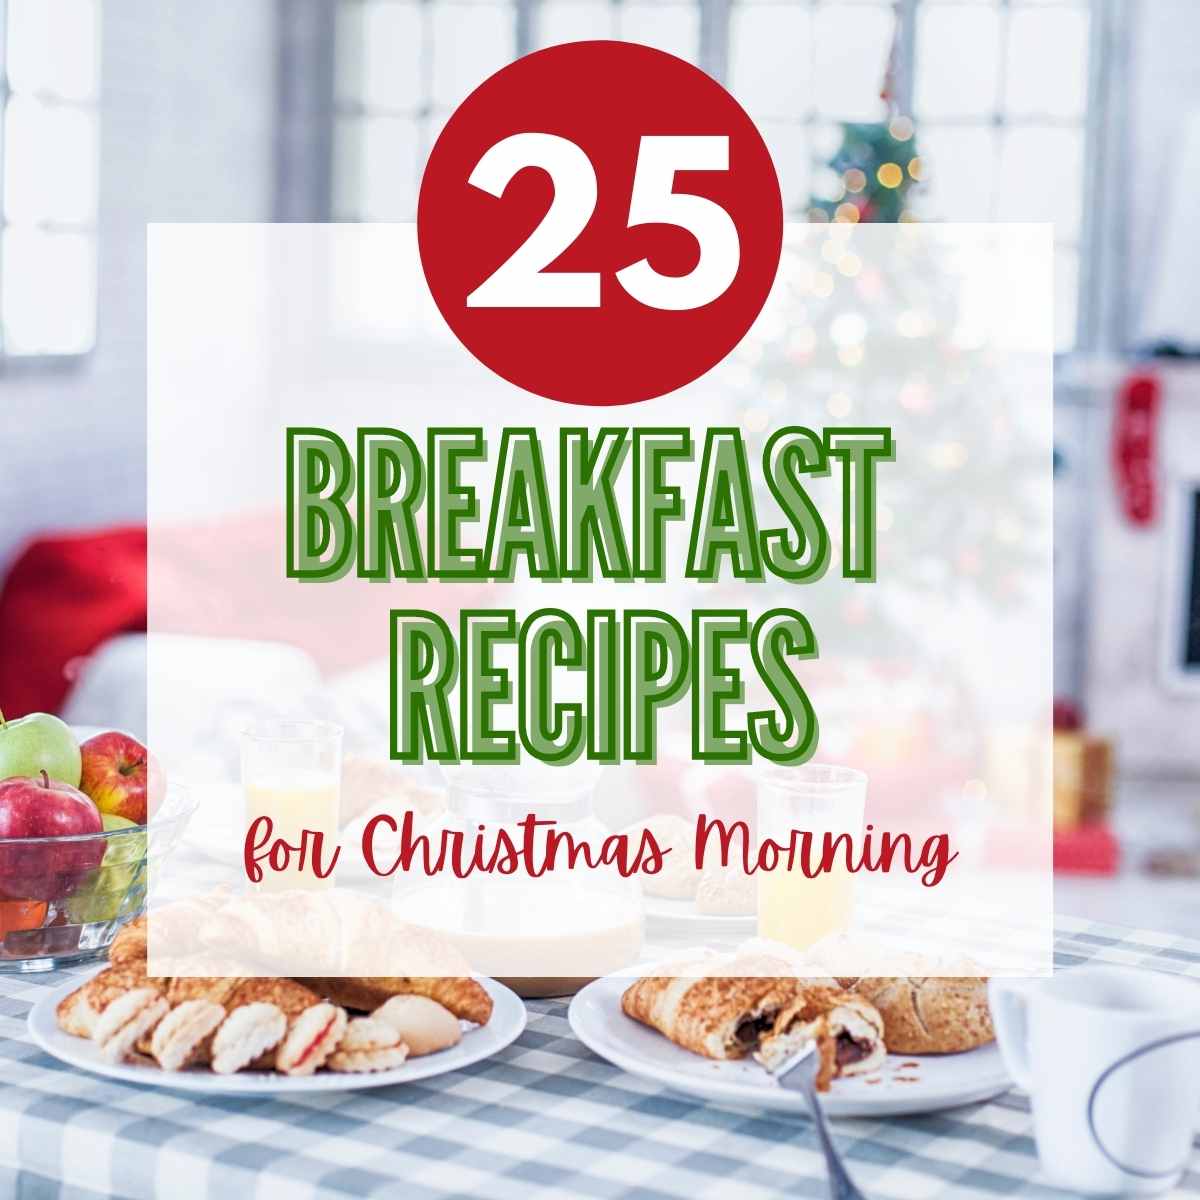 Breakfast foods with Christmas morning breakfast ideas text overlay.